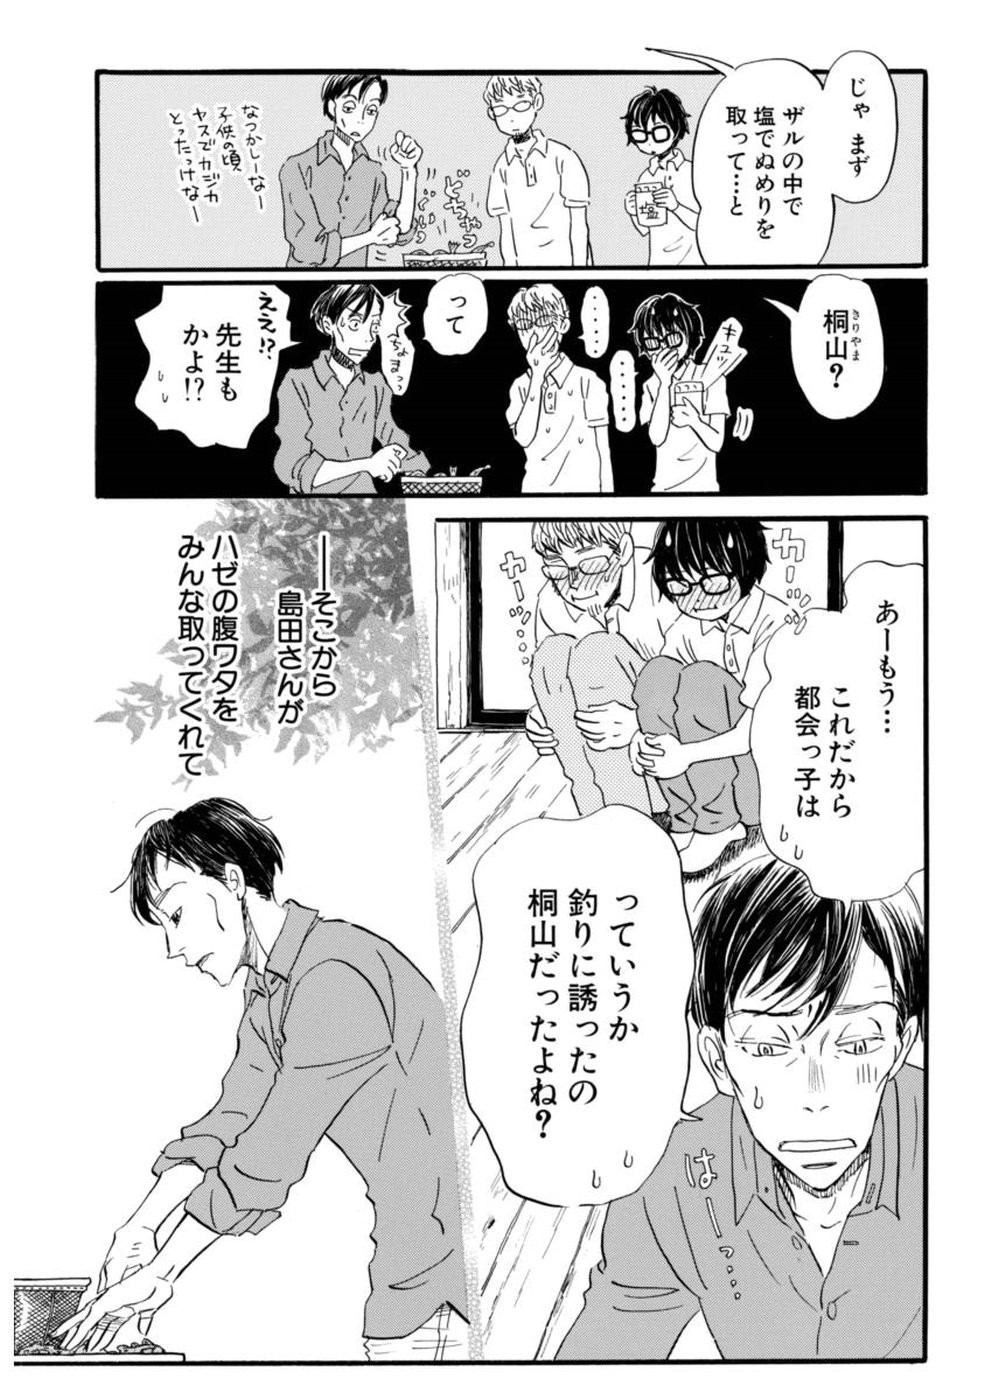 3 Gatsu no Lion - Chapter 146 - Page 5